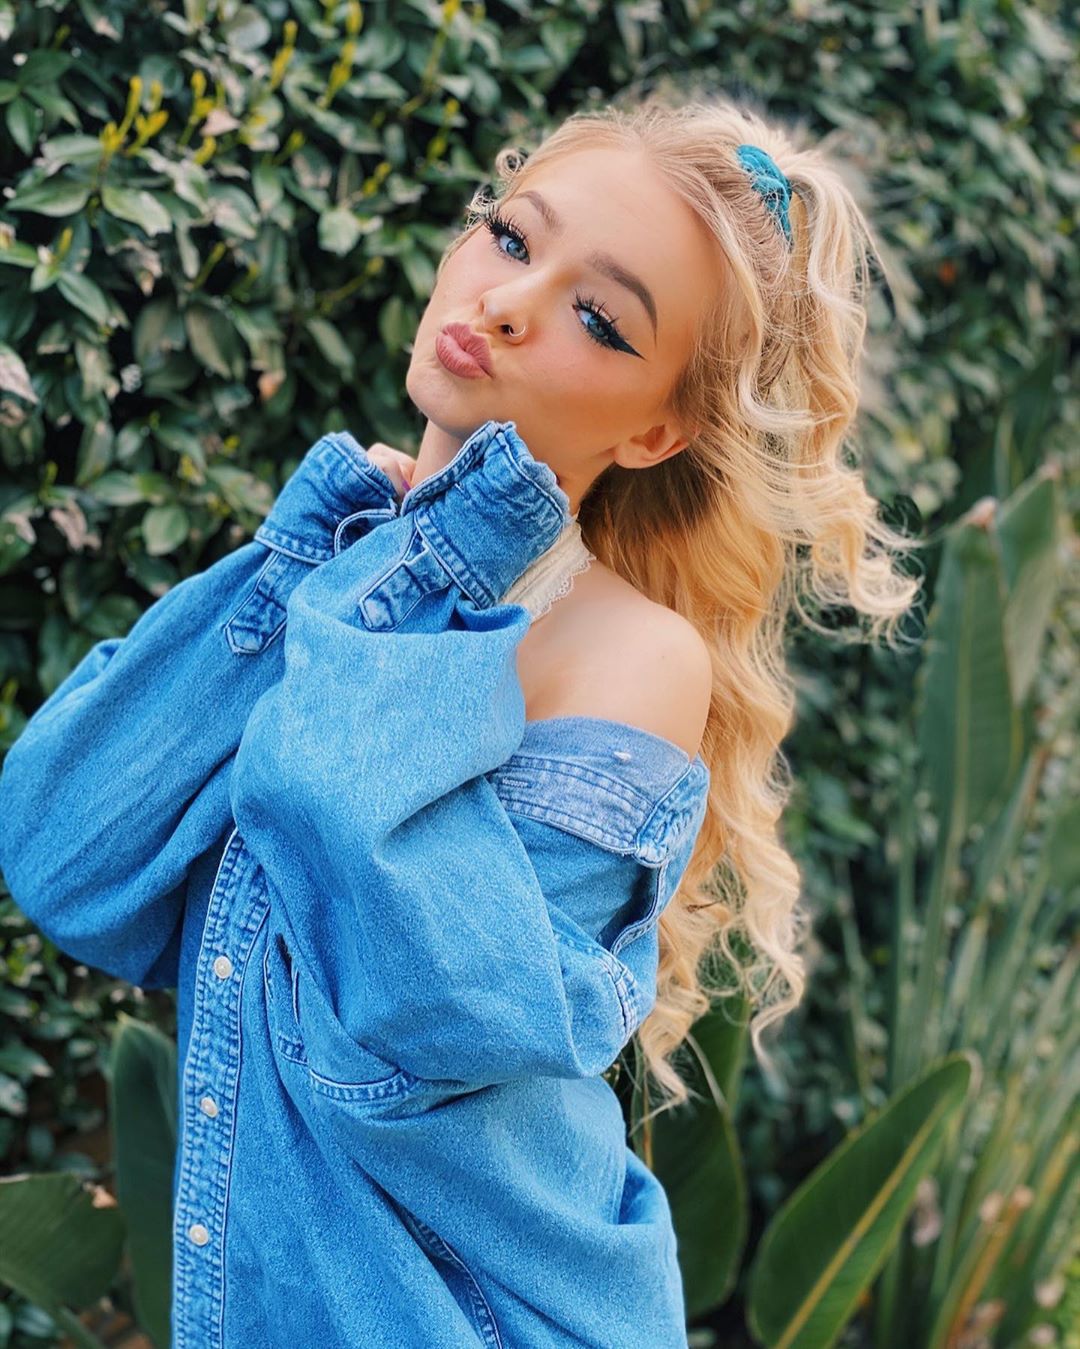 Pin by Katie on Zody in 2019 | Snapchat, Musically star
 |Tiktok Zoe